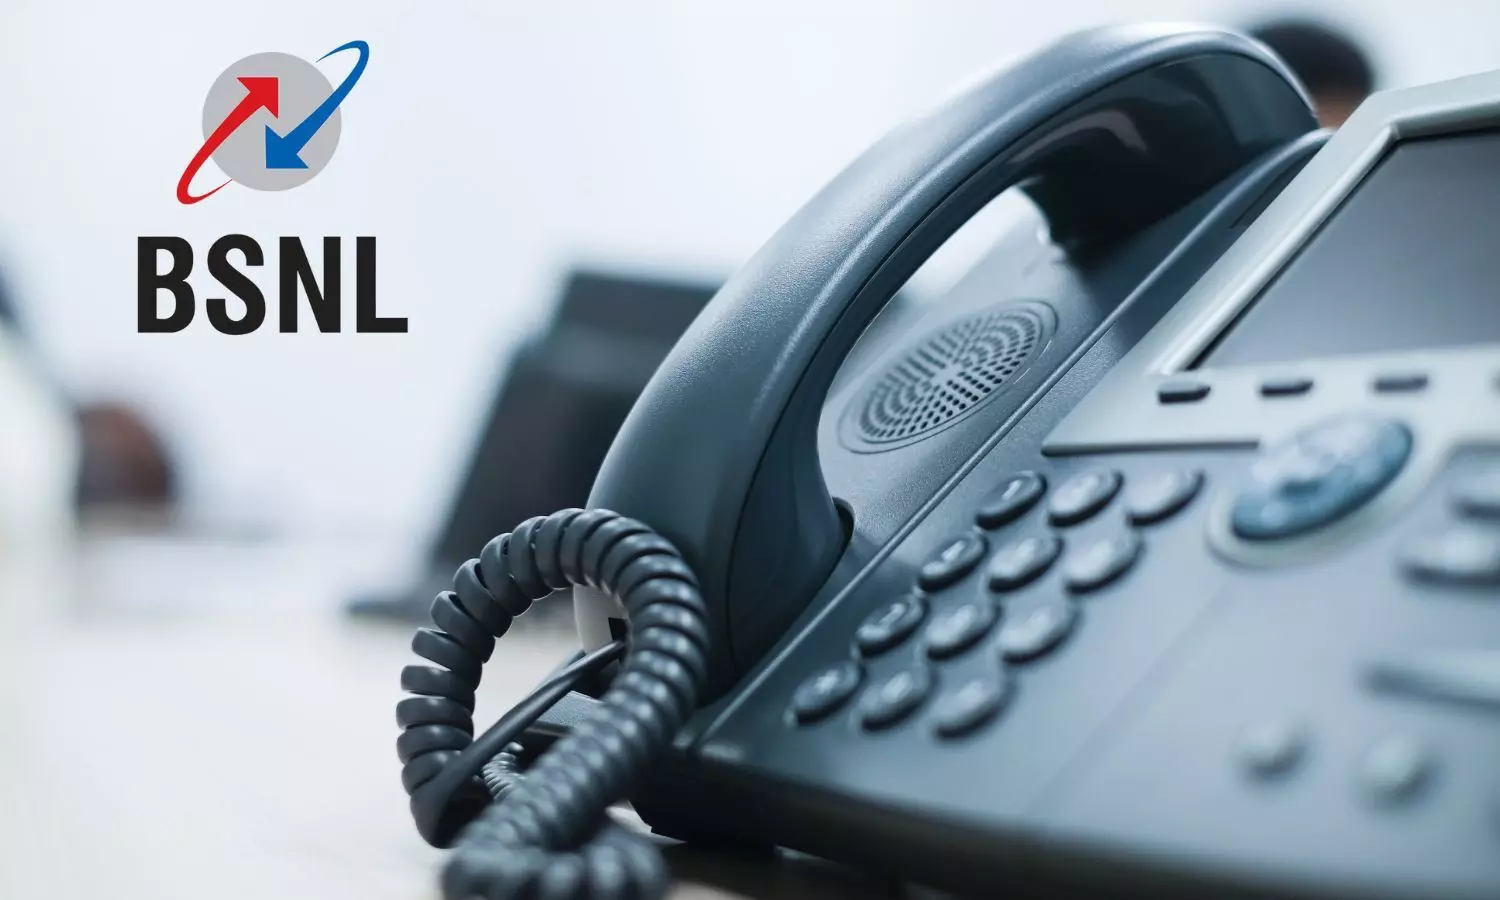 BSNL logo and a telephone